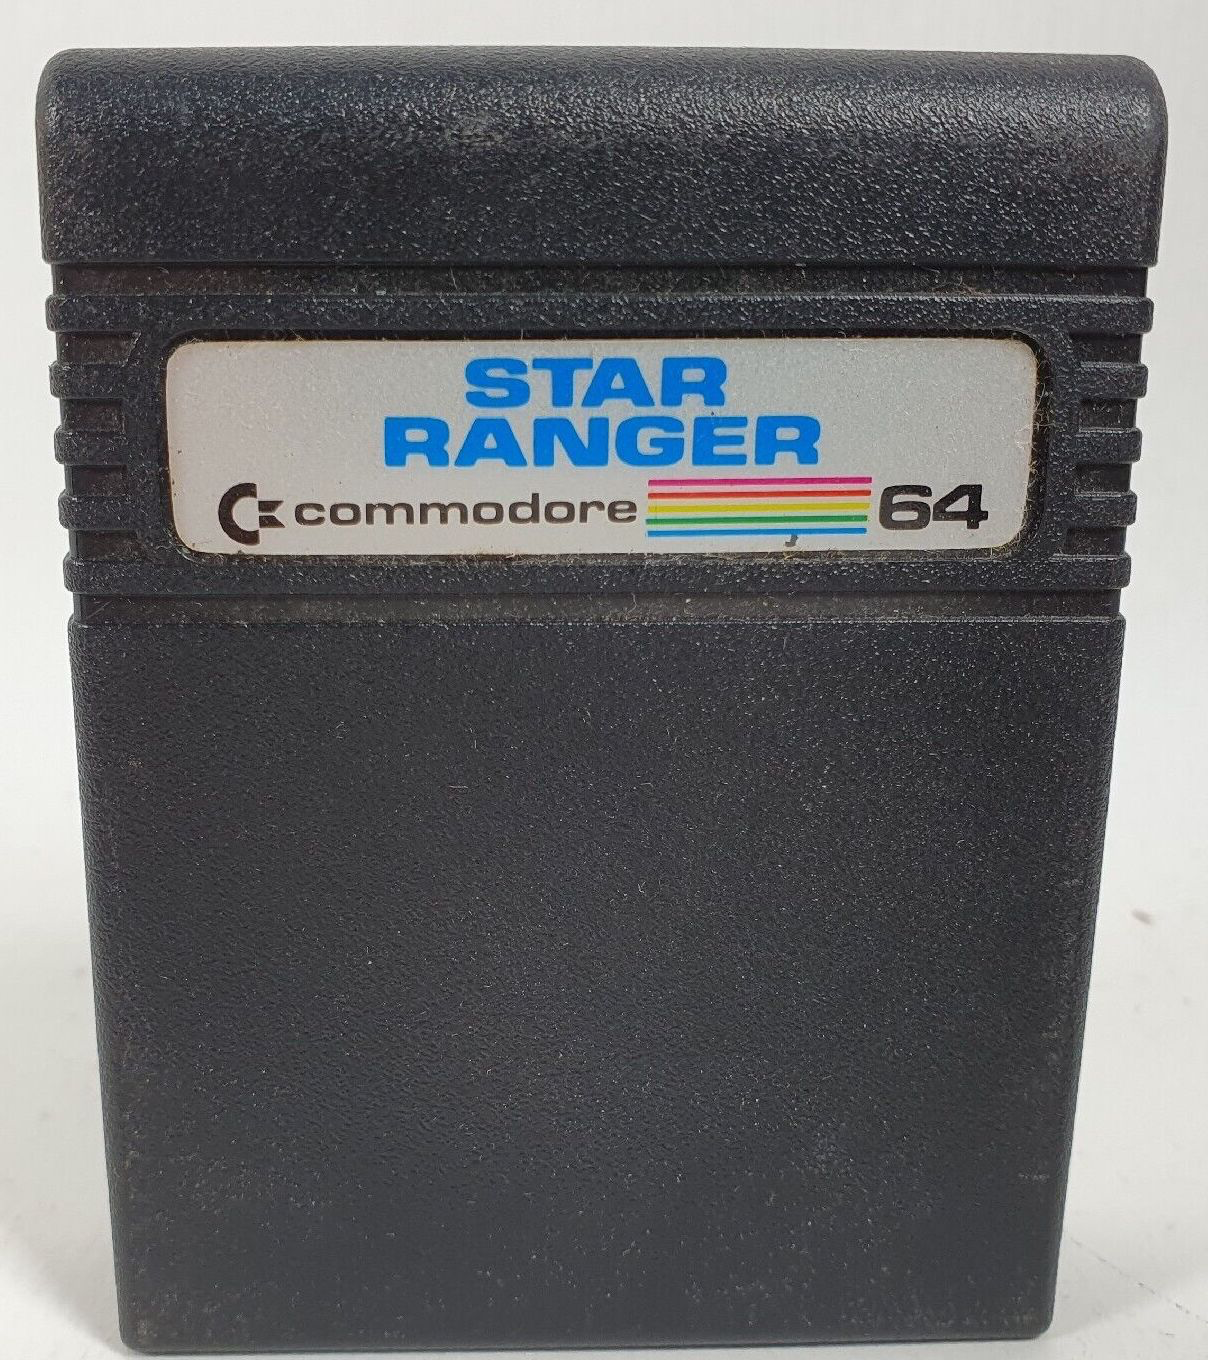 Star Ranger - Commodore 64